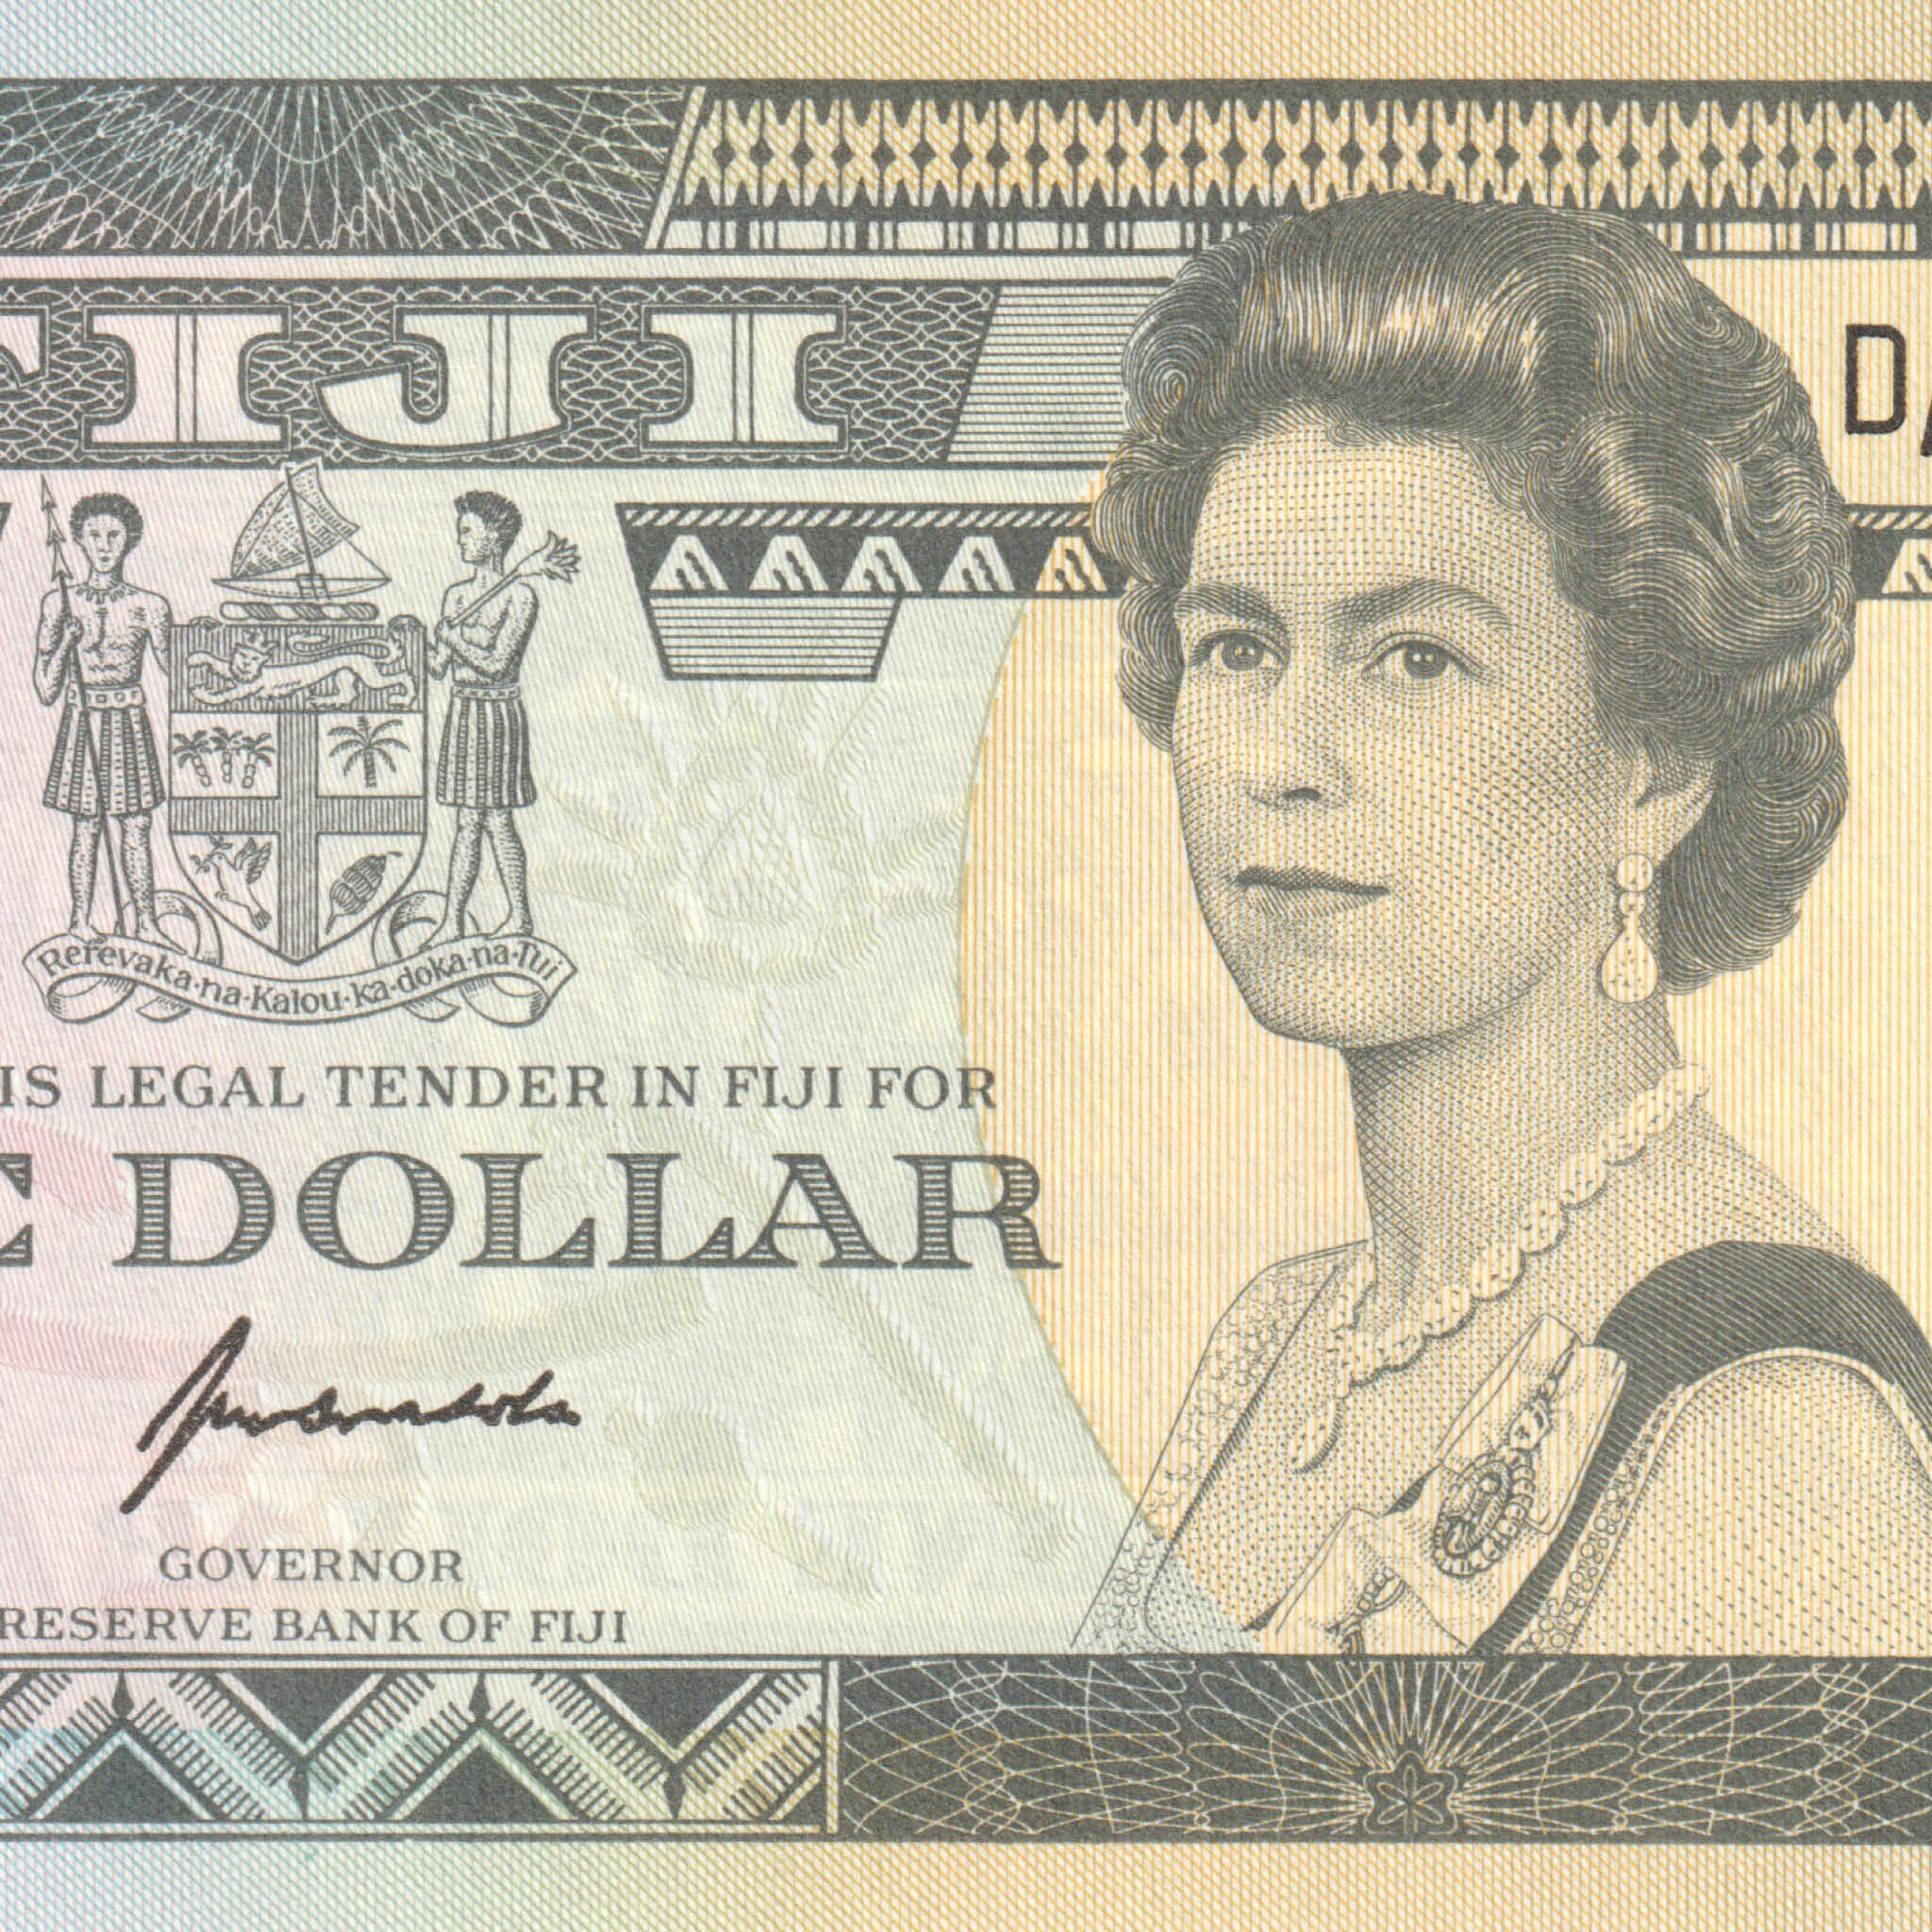 Fiji 1 Dollar, 1993, B501b, P89a, UNC - Robert's World Money - World Banknotes